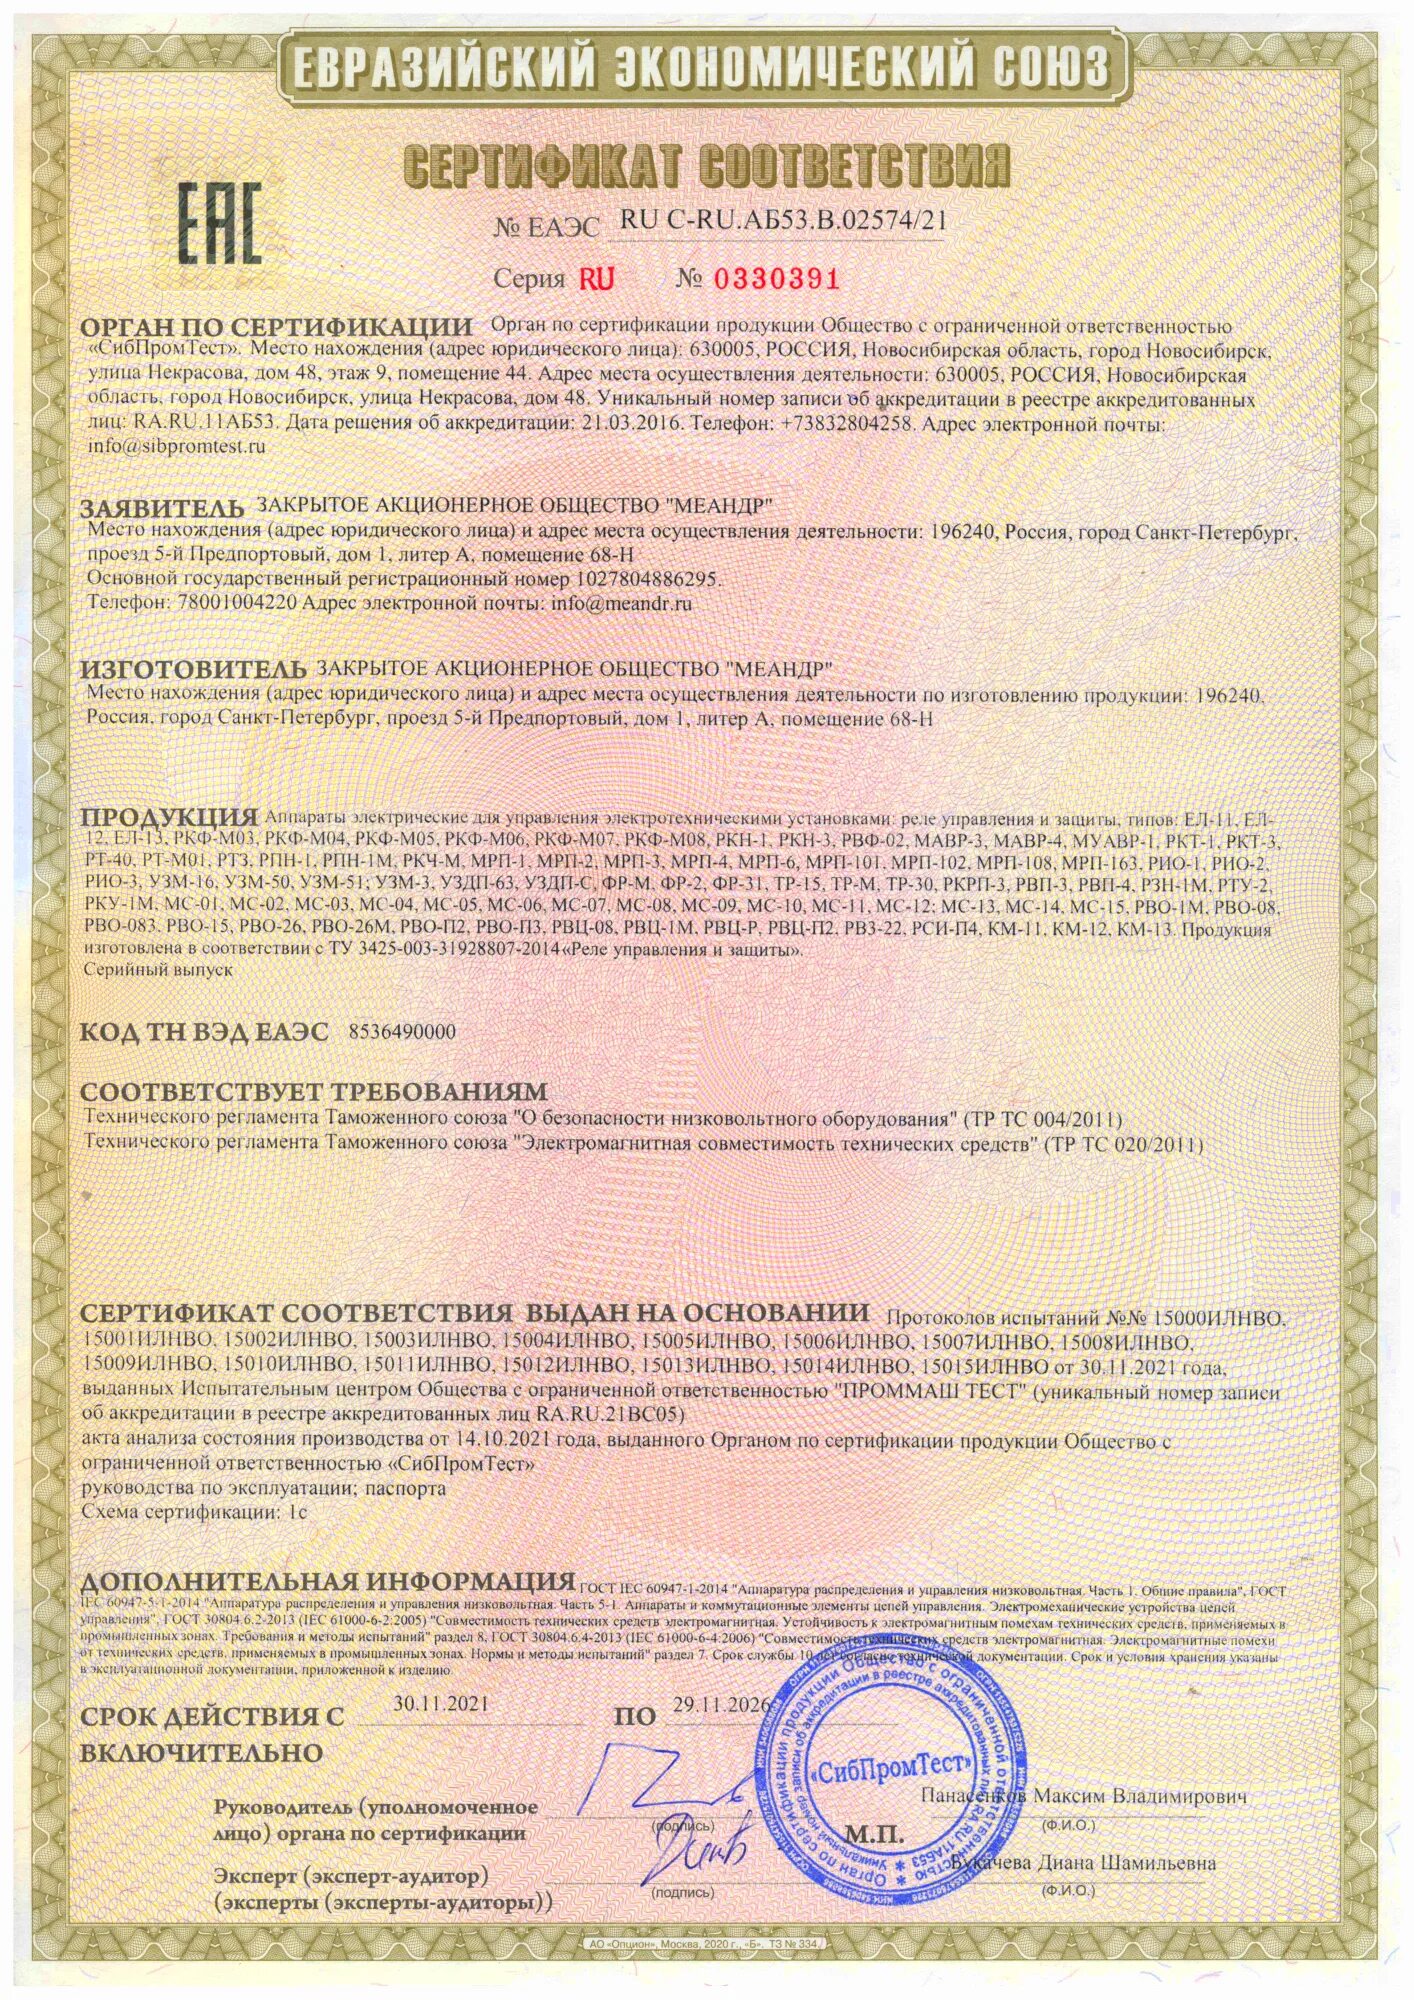 Kr1 s контроллер уровня сертификат соответствия Nolta. Сертификат соответствия ra.ru.аб06.н00070. ЕАЭС kg 417/КЦА.ОСП.025.Lu.02.00085. ПДУ 3 сертификат соответствия. 27.11 2026